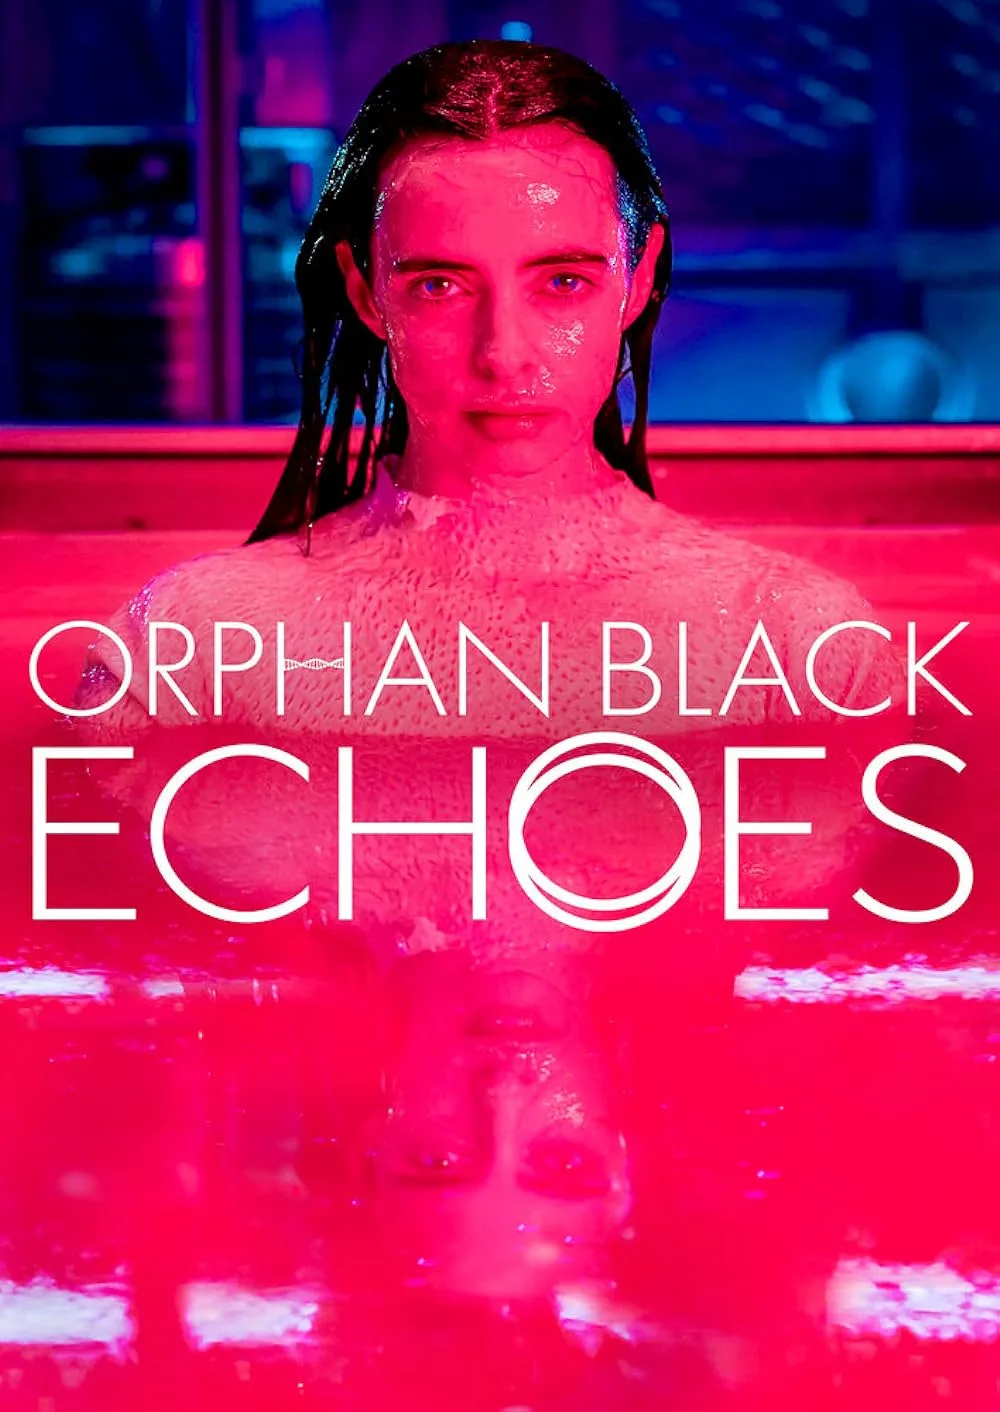 Assistir Orphan Black - Echoes Online Grátis